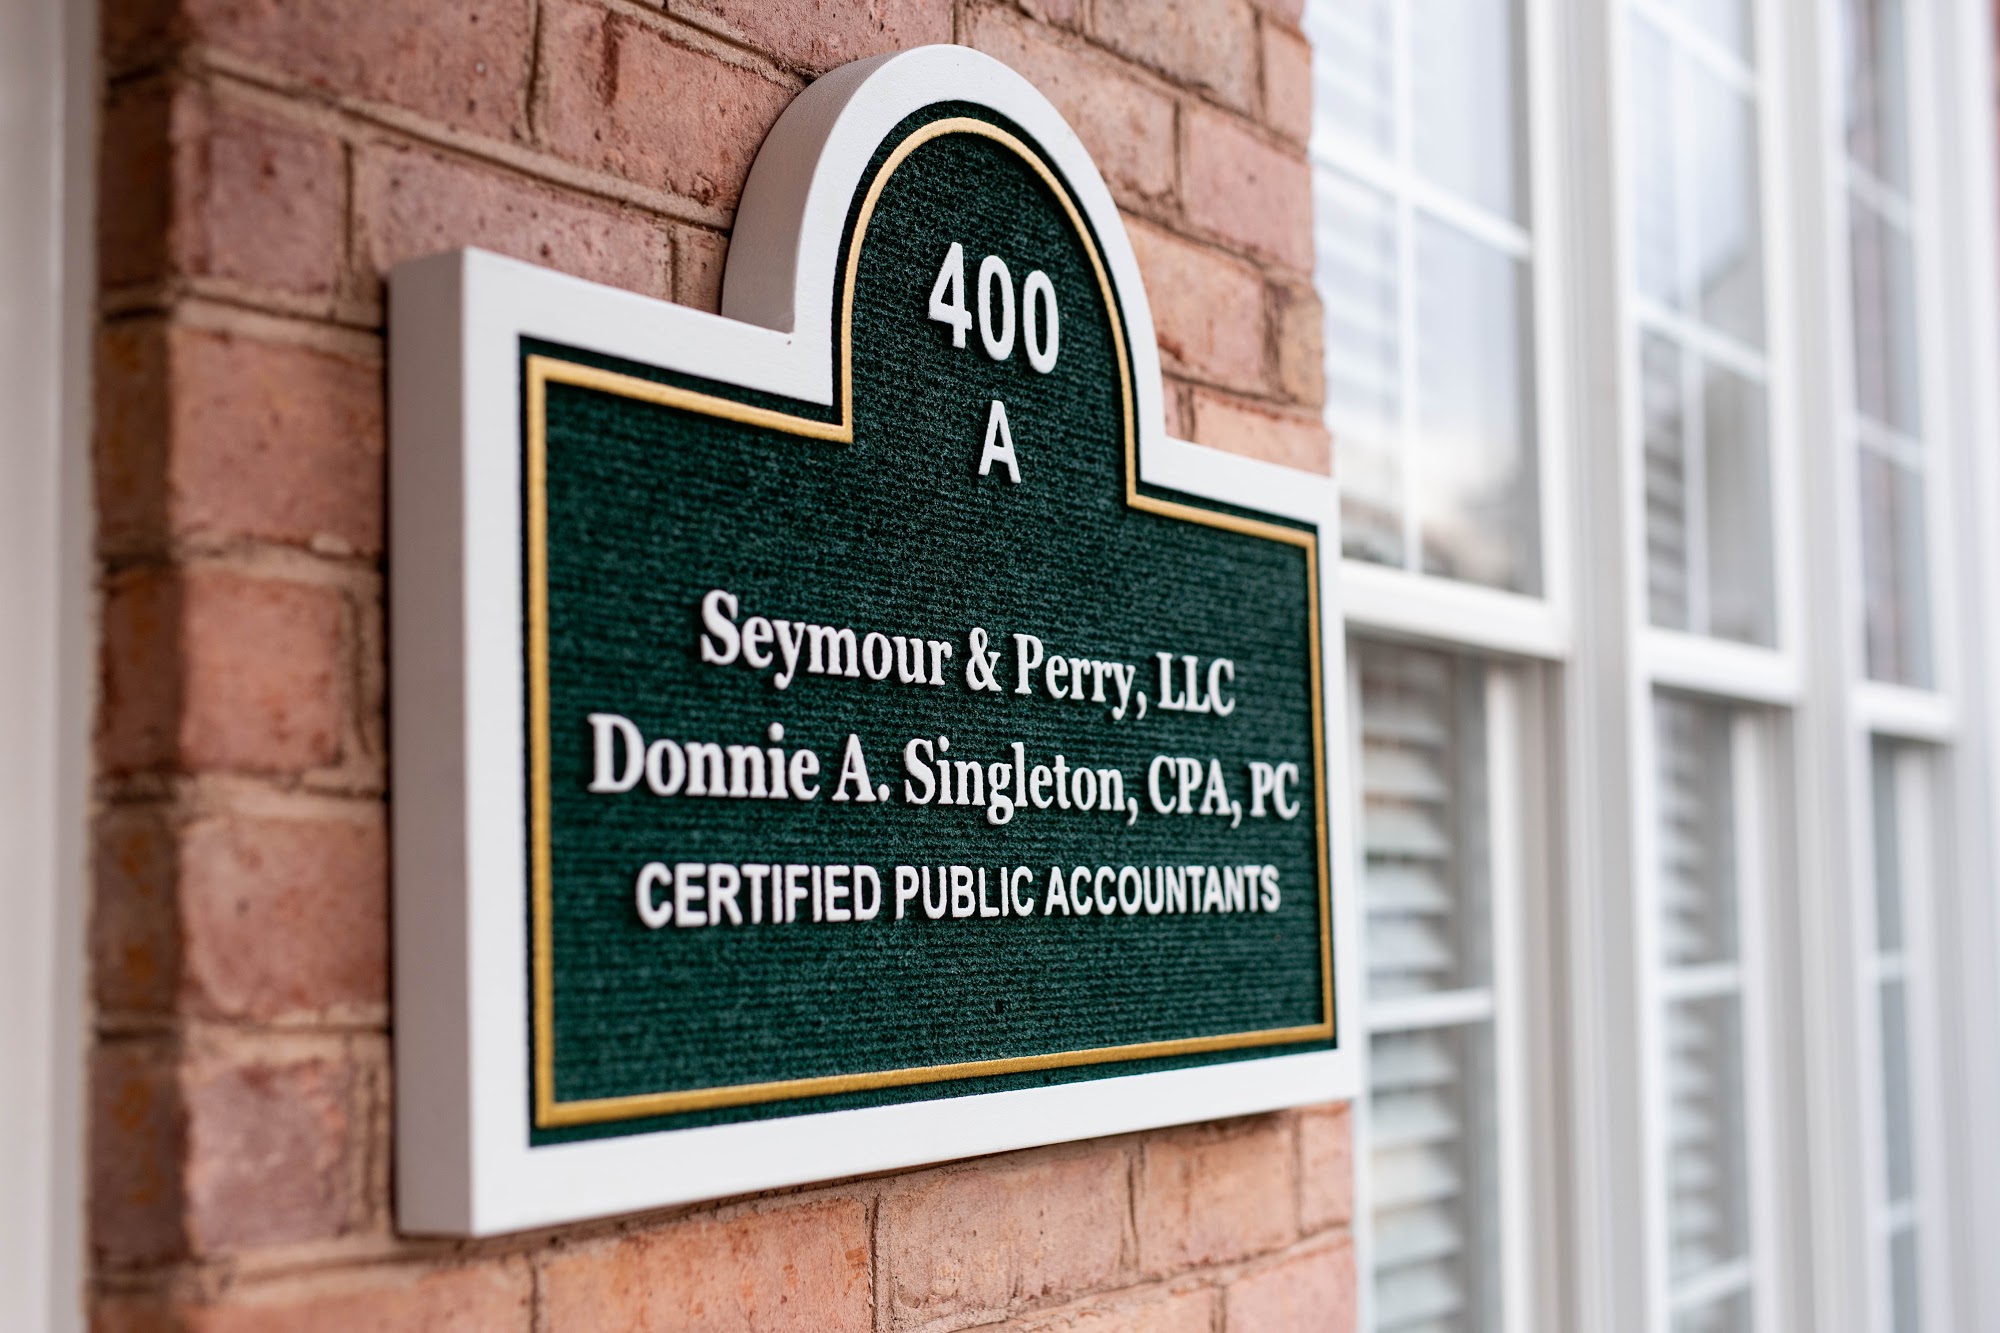 Seymour & Perry, LLC